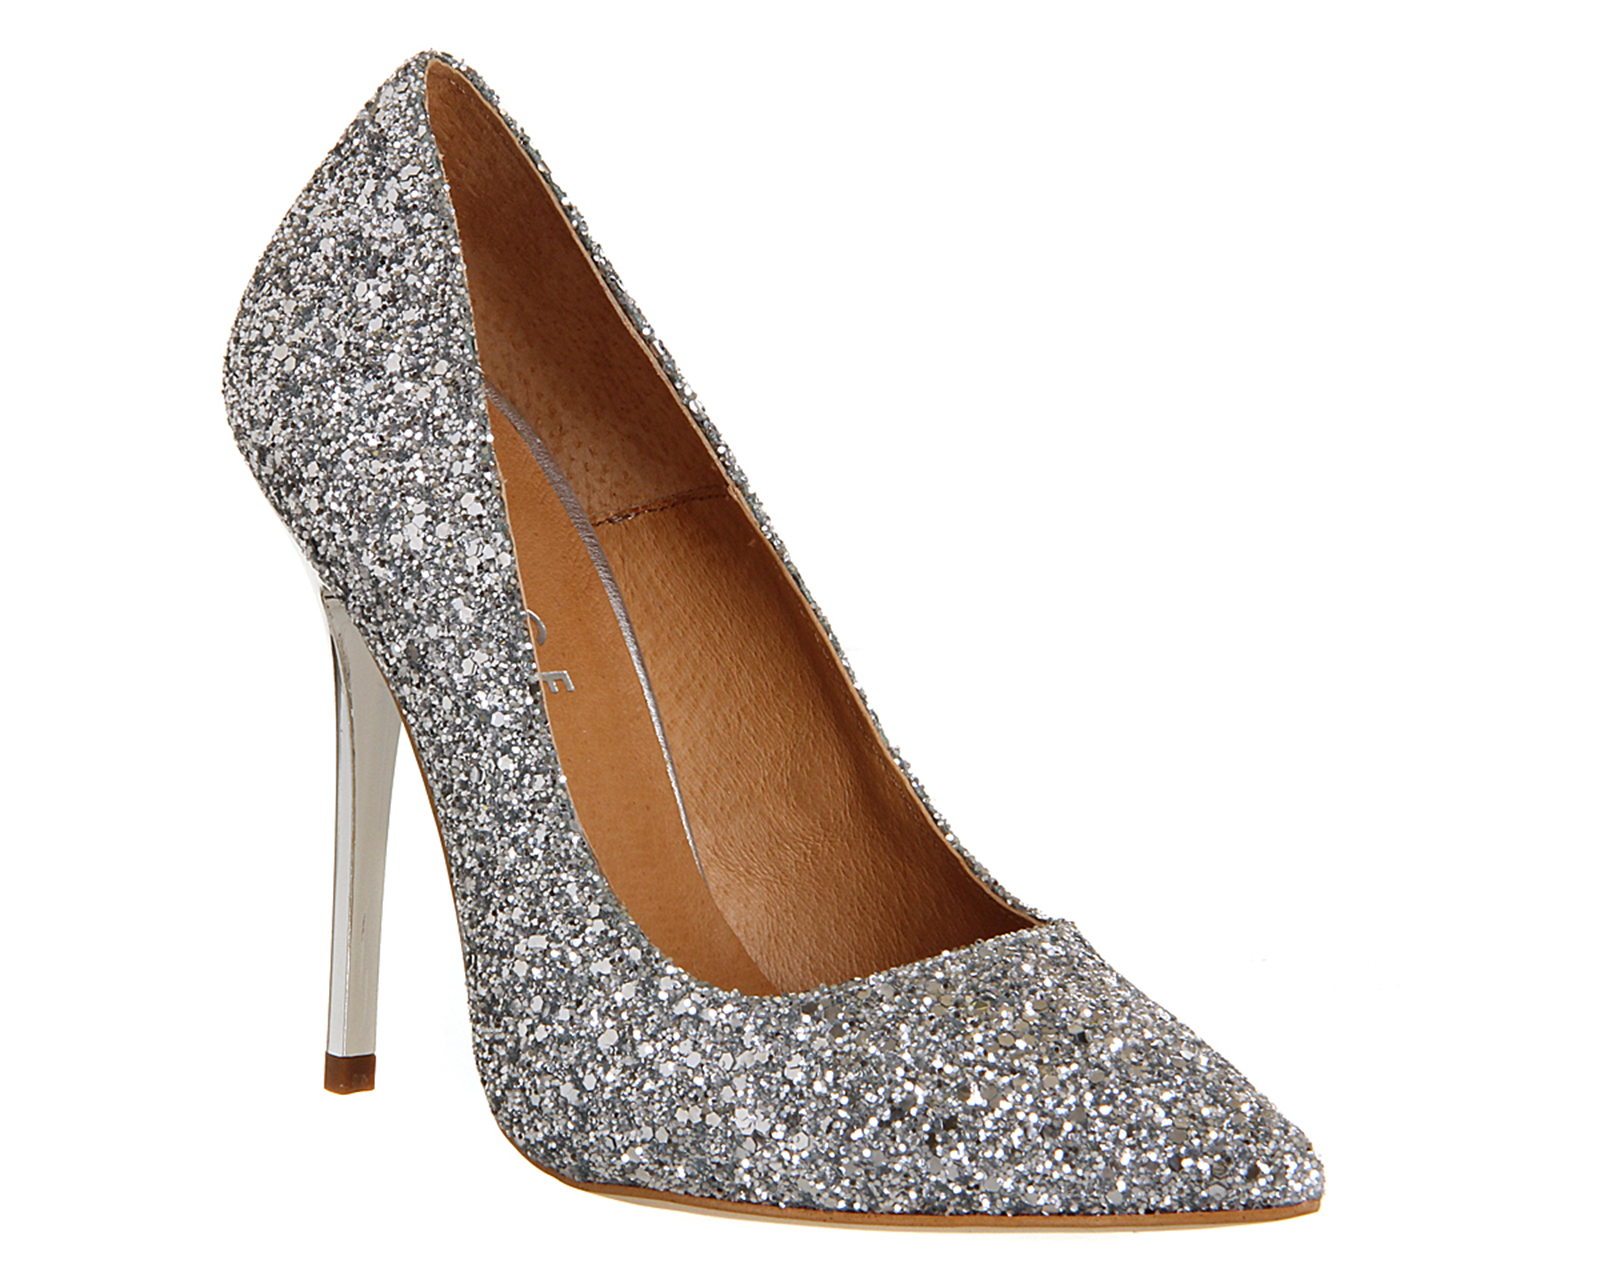 sparkly high heels uk